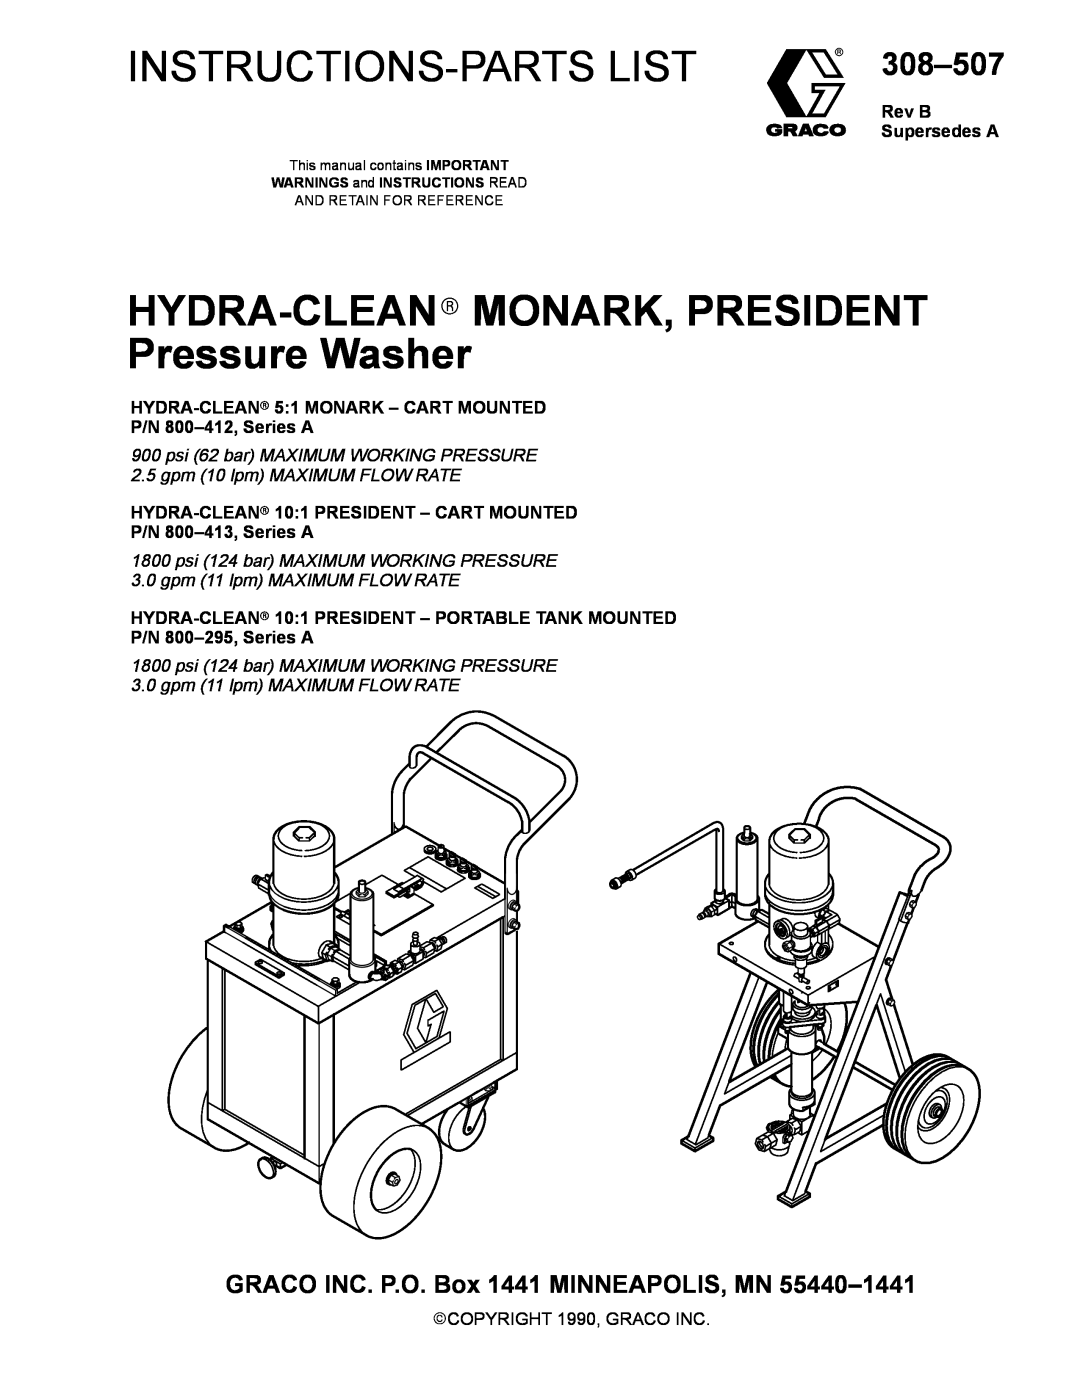 Graco Inc 800413, 800412, 800295 manual Instructions-Parts List, HYDRA-CLEAN MONARK, PRESIDENT Pressure Washer, 308-507 